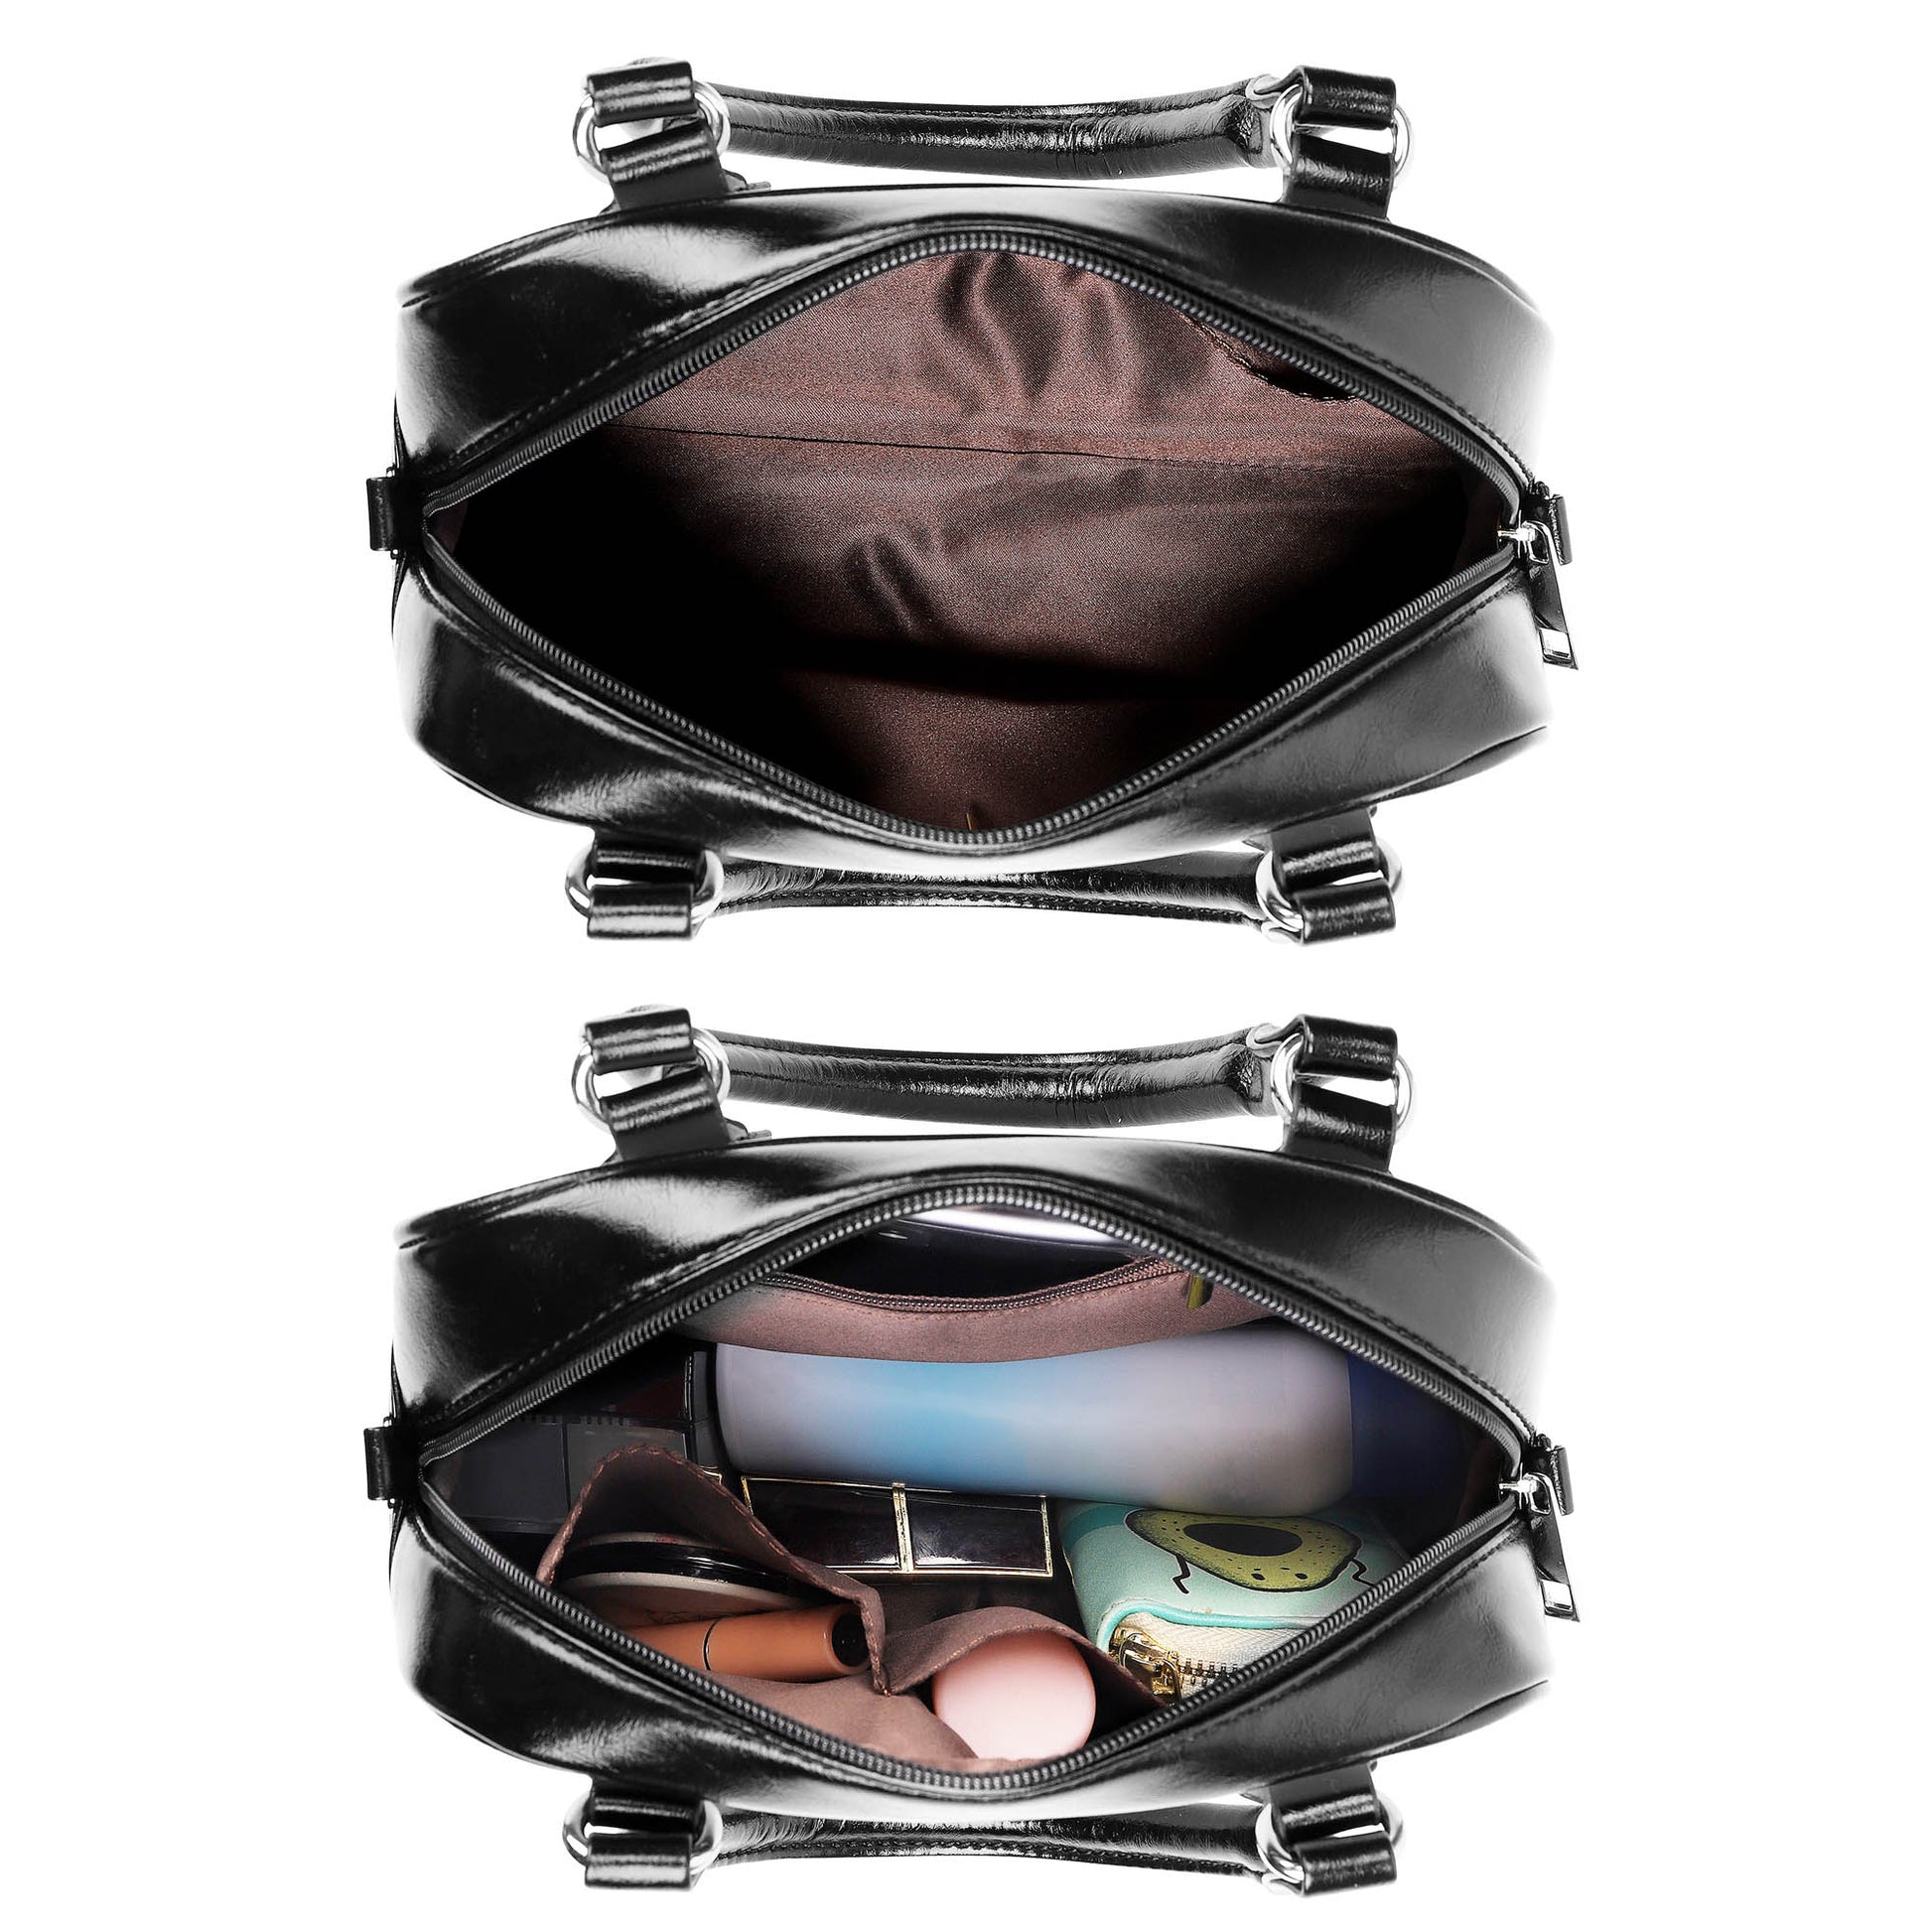 Dunbar Modern Tartan Shoulder Handbags with Family Crest - Tartanvibesclothing